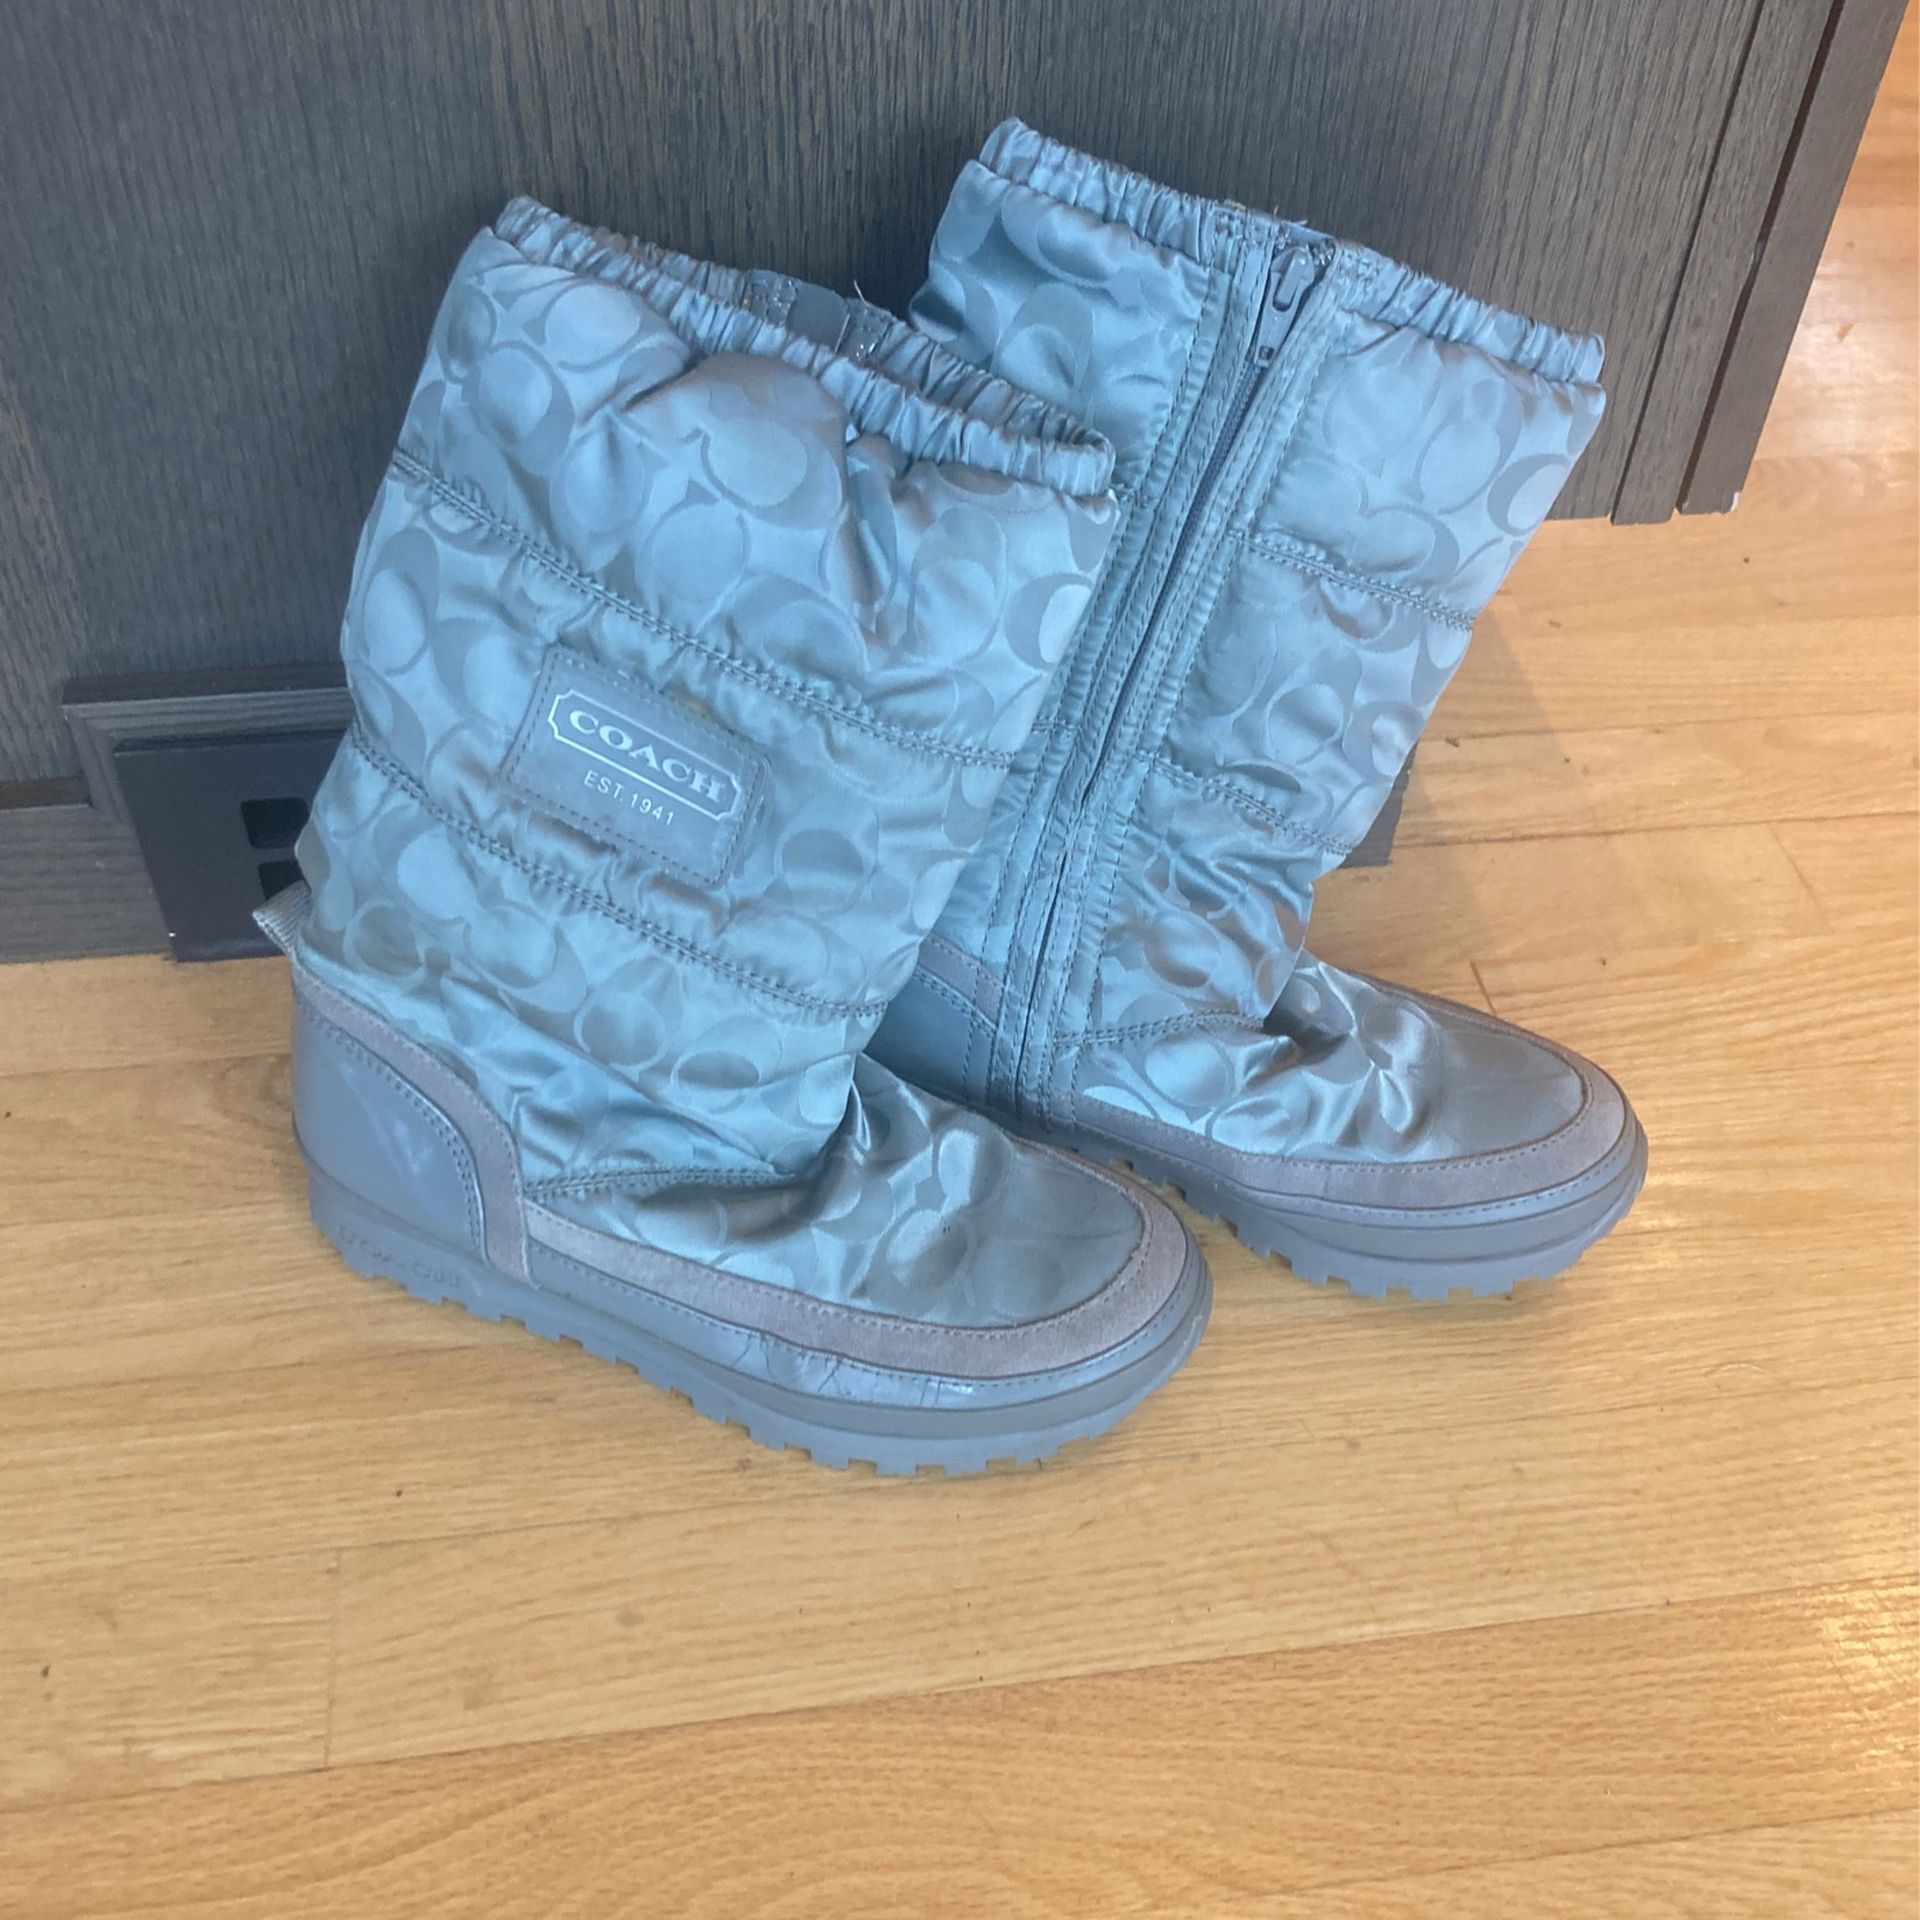 Coach Snow Boots Size 7.5 B